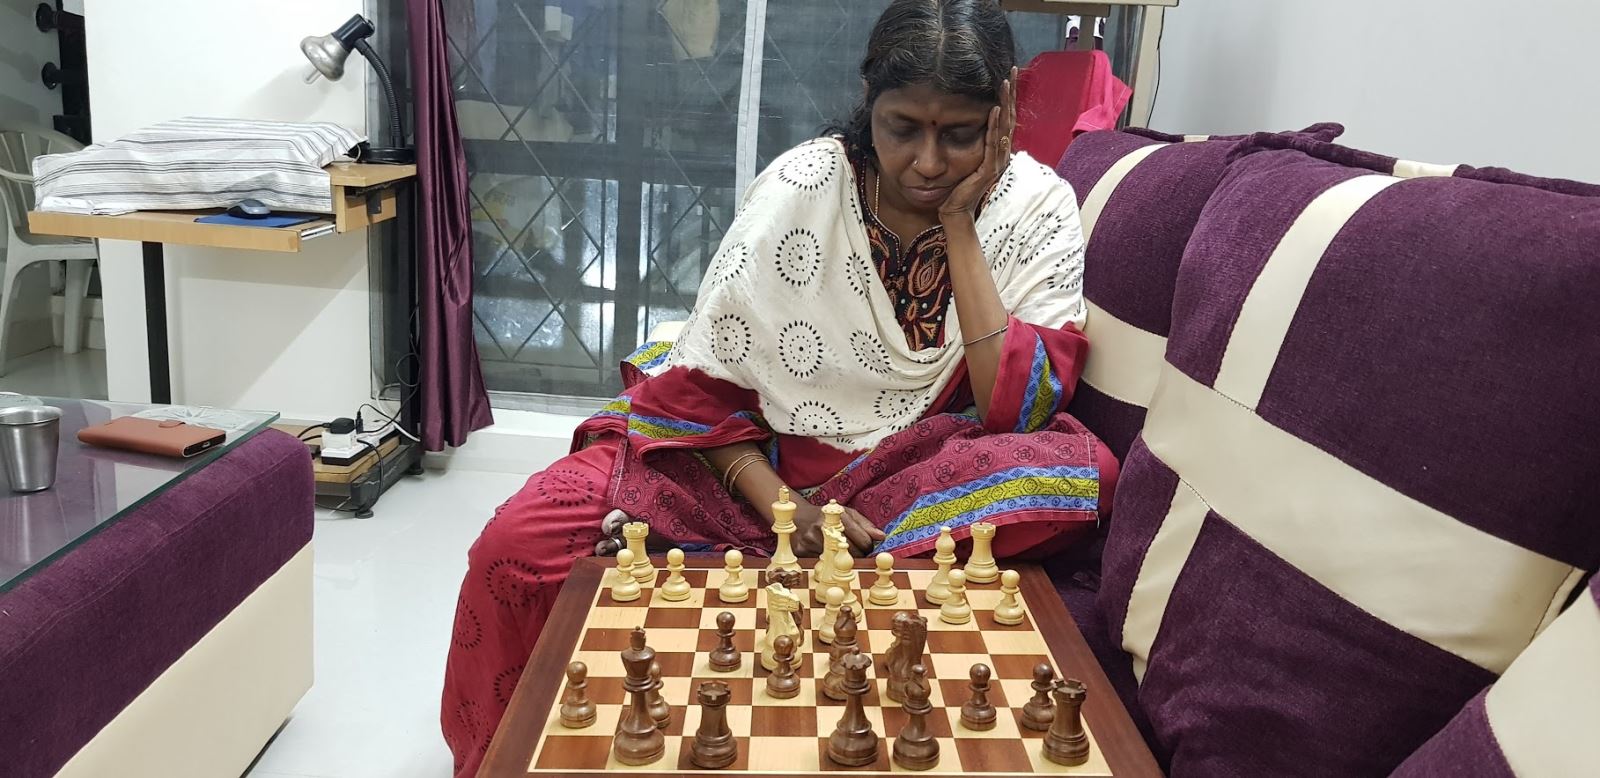 Leela playing chess with Amruta Mokal